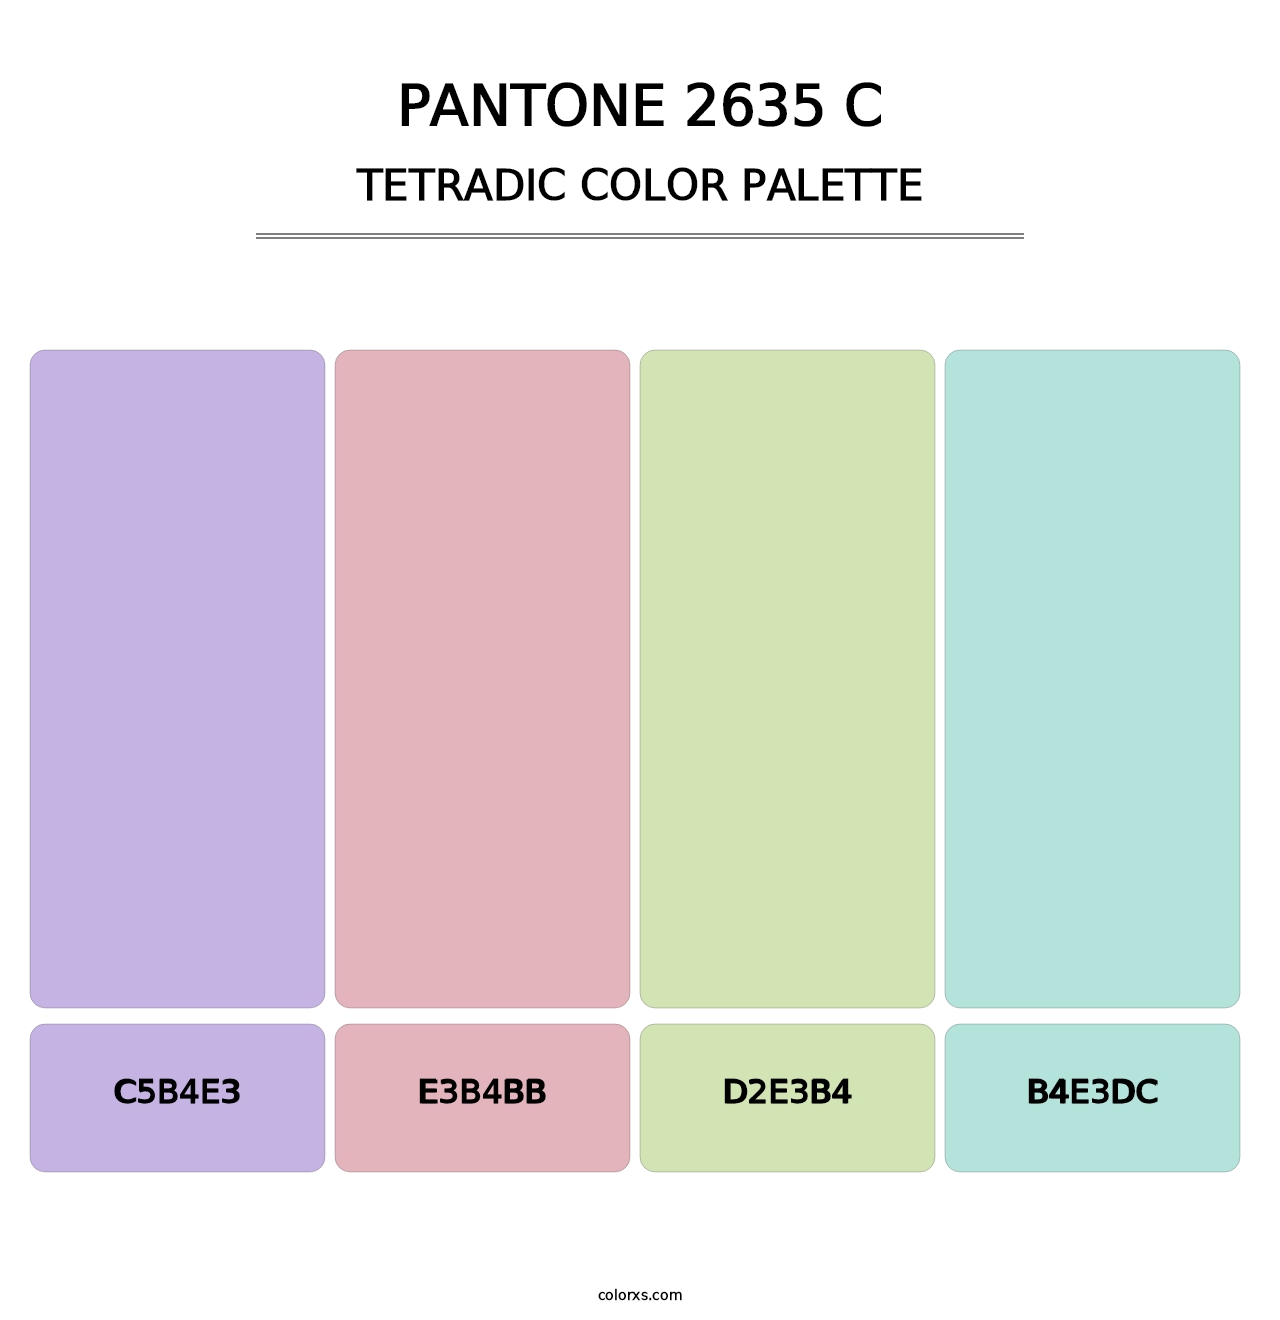 PANTONE 2635 C - Tetradic Color Palette